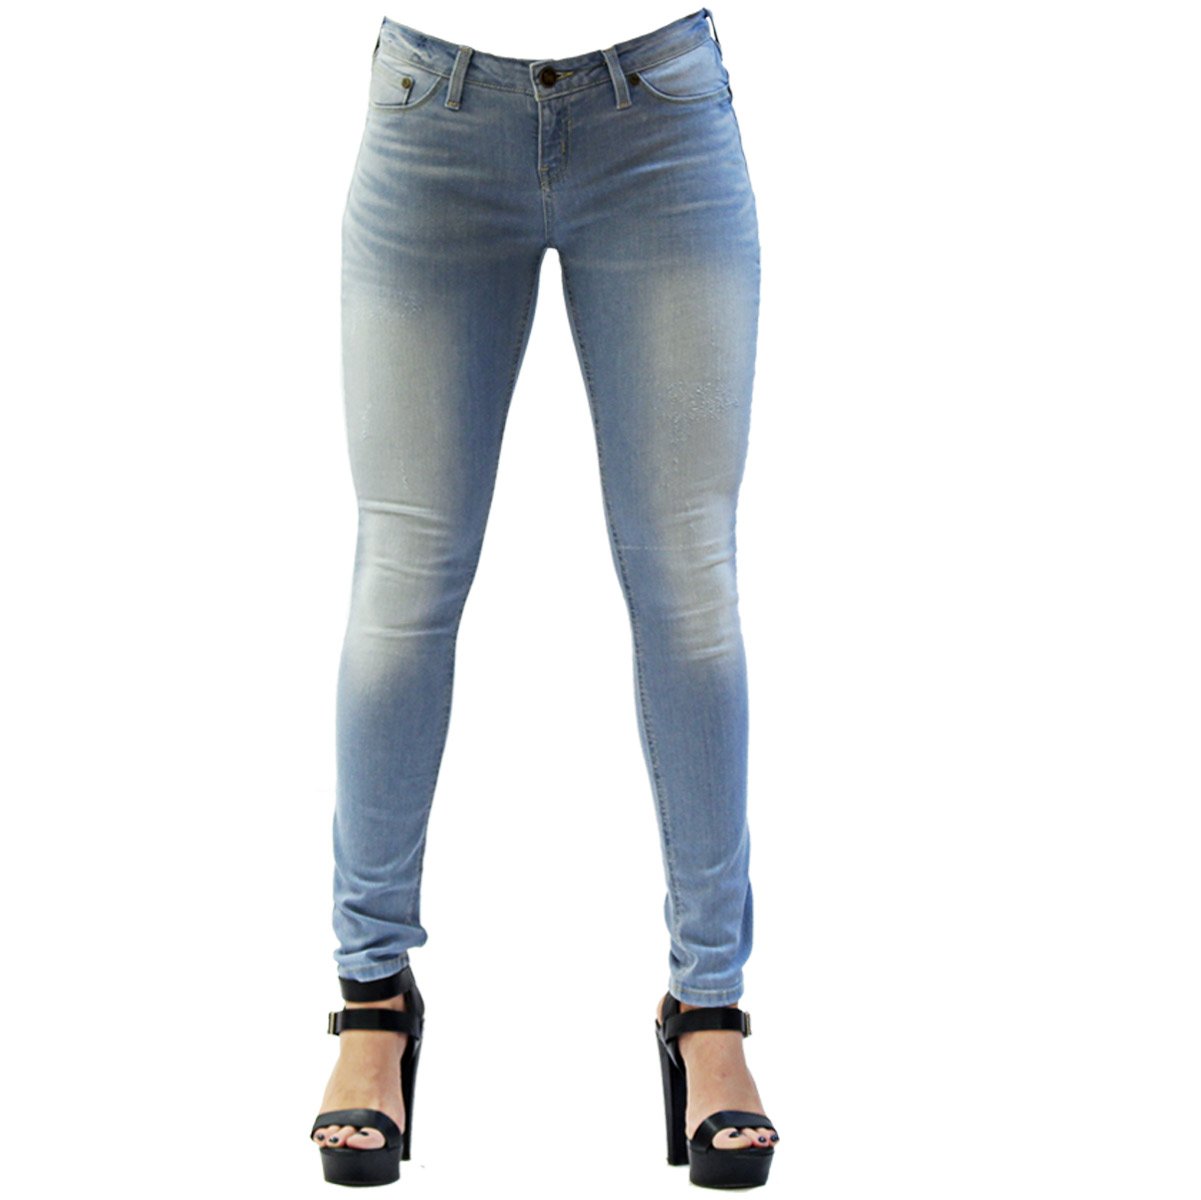 Jeans Toro Jeans, Corte Skinny